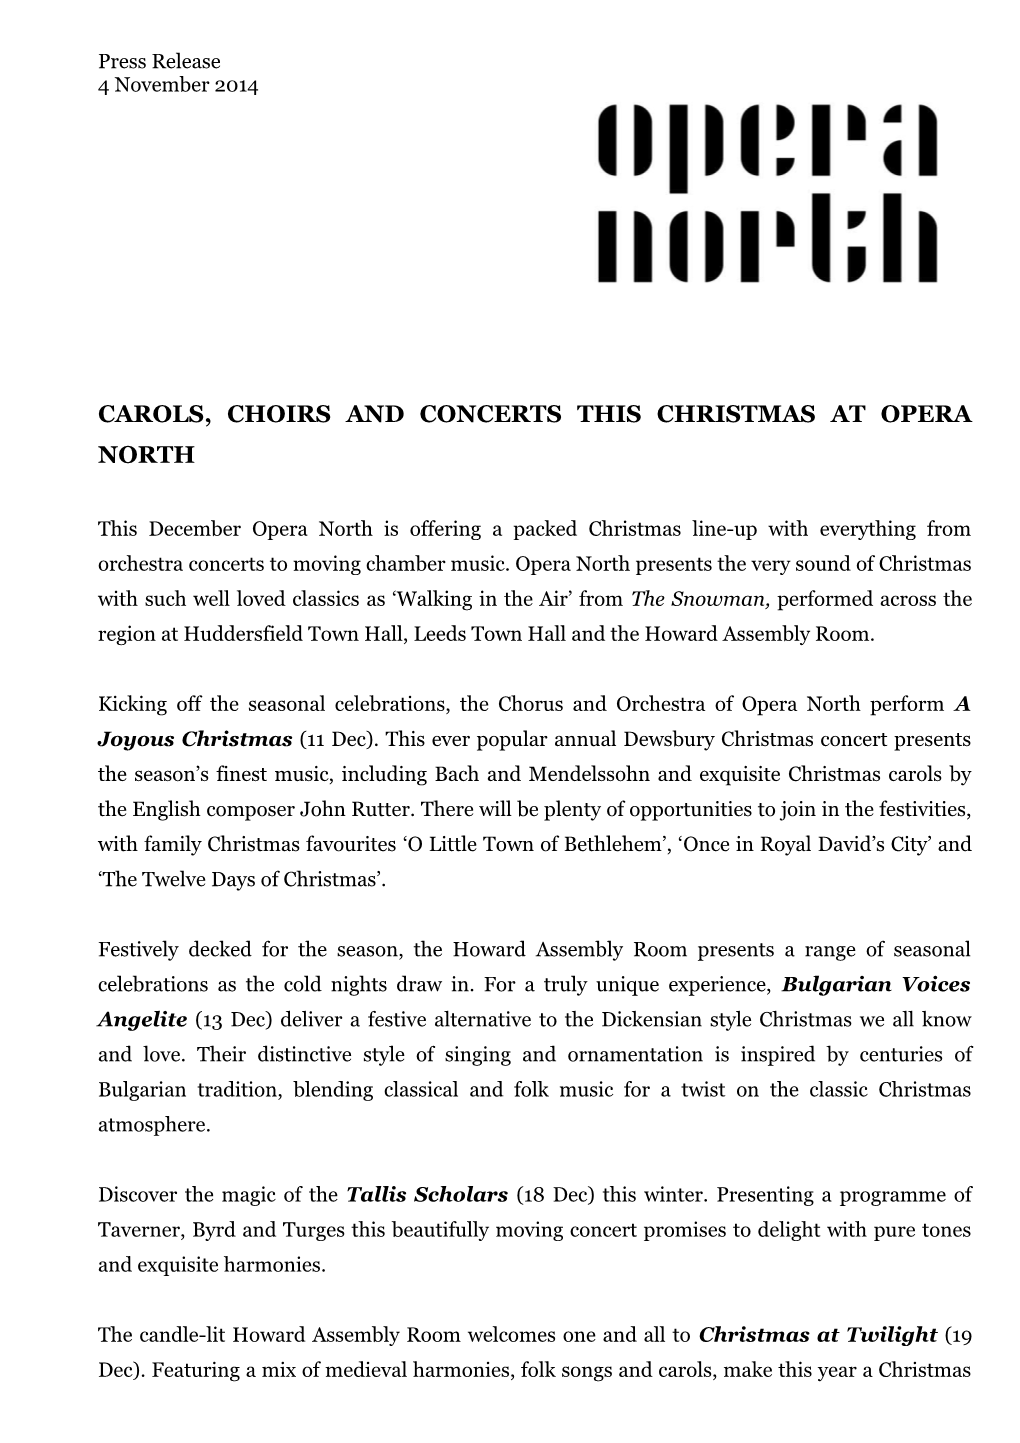 Carols, Choirs and Concerts for Christmas at Opera North